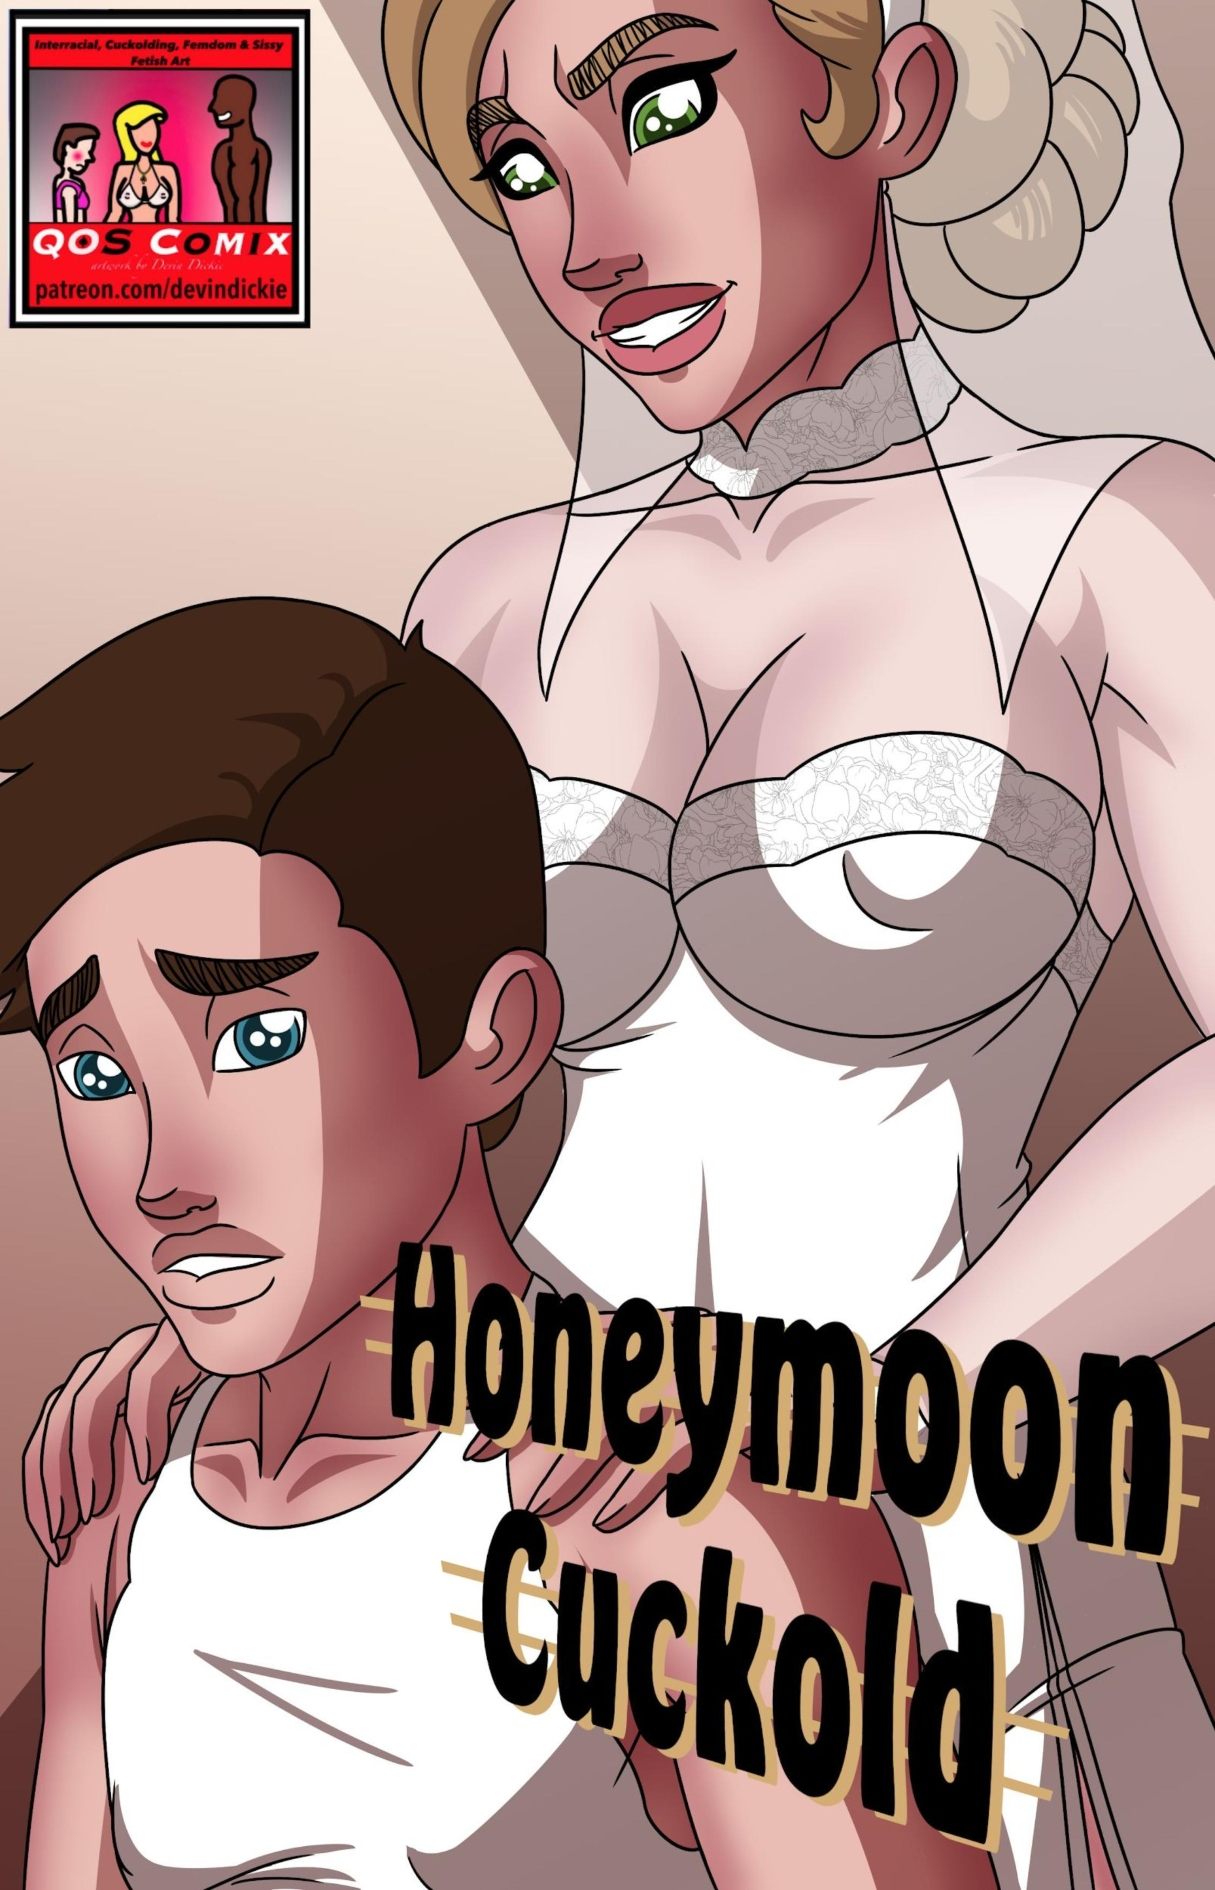 Honeymoon Cuckold by Devin Dickie pic